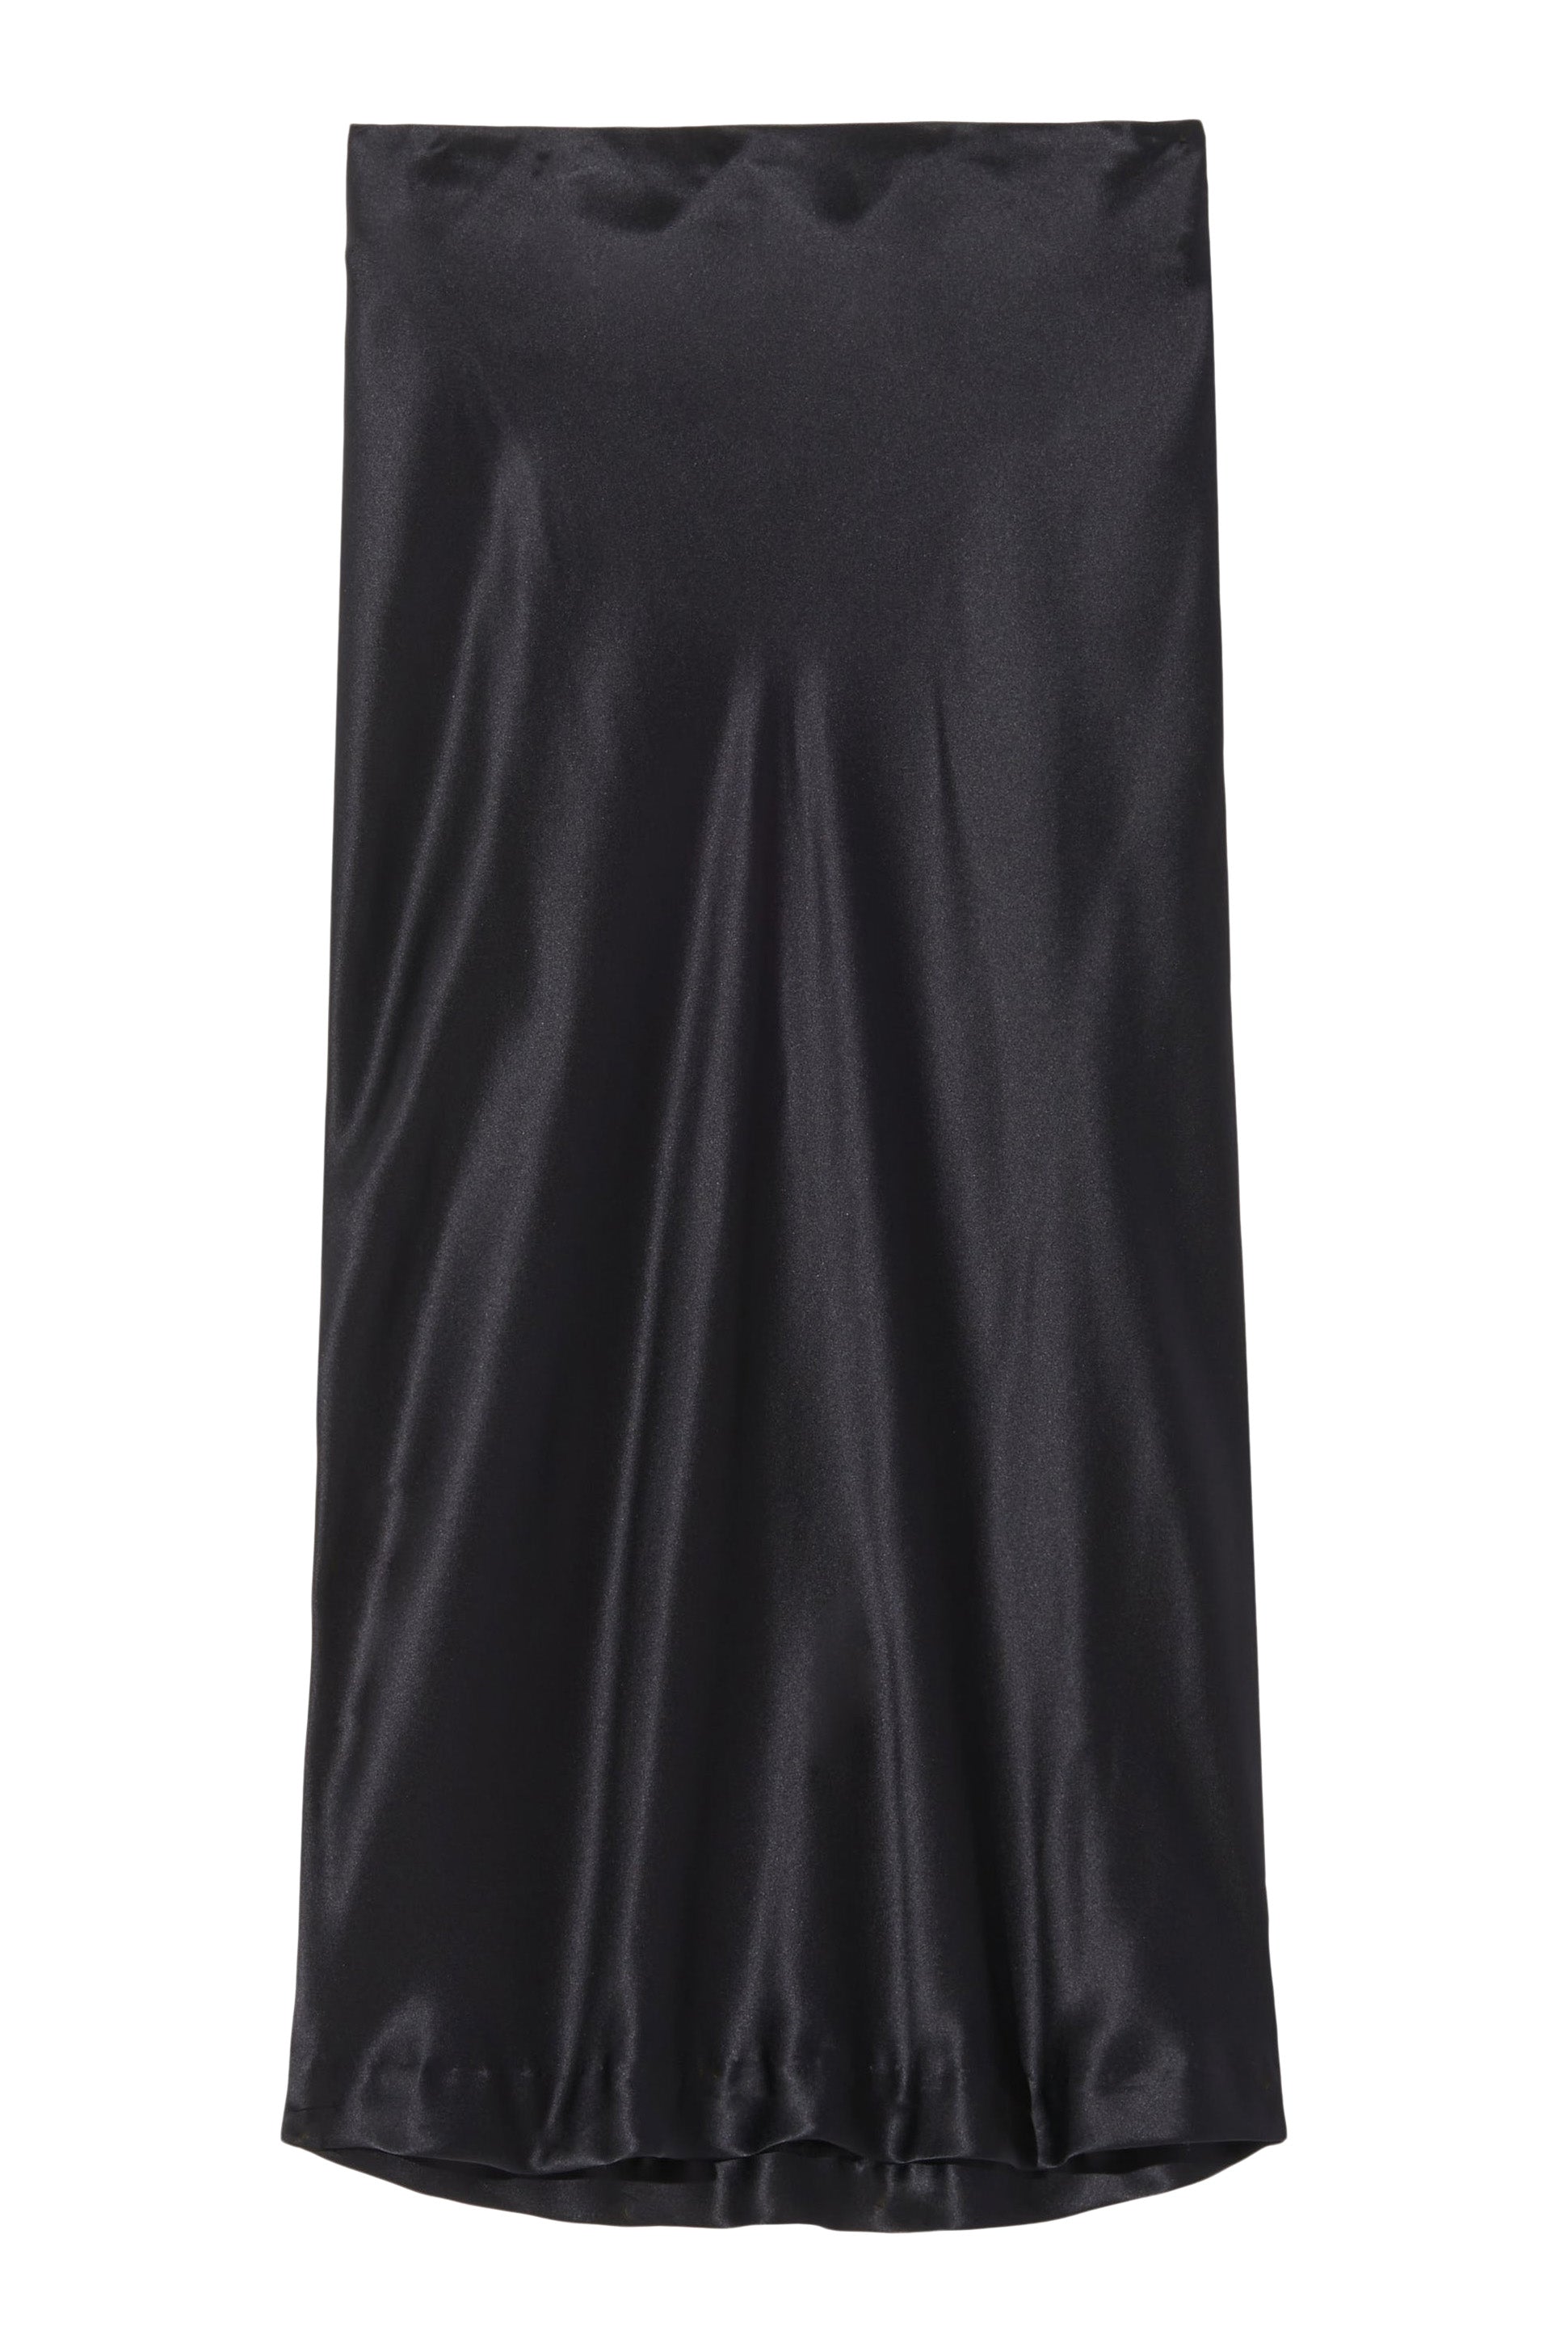 Nili Lotan Rosine Skirt in Black